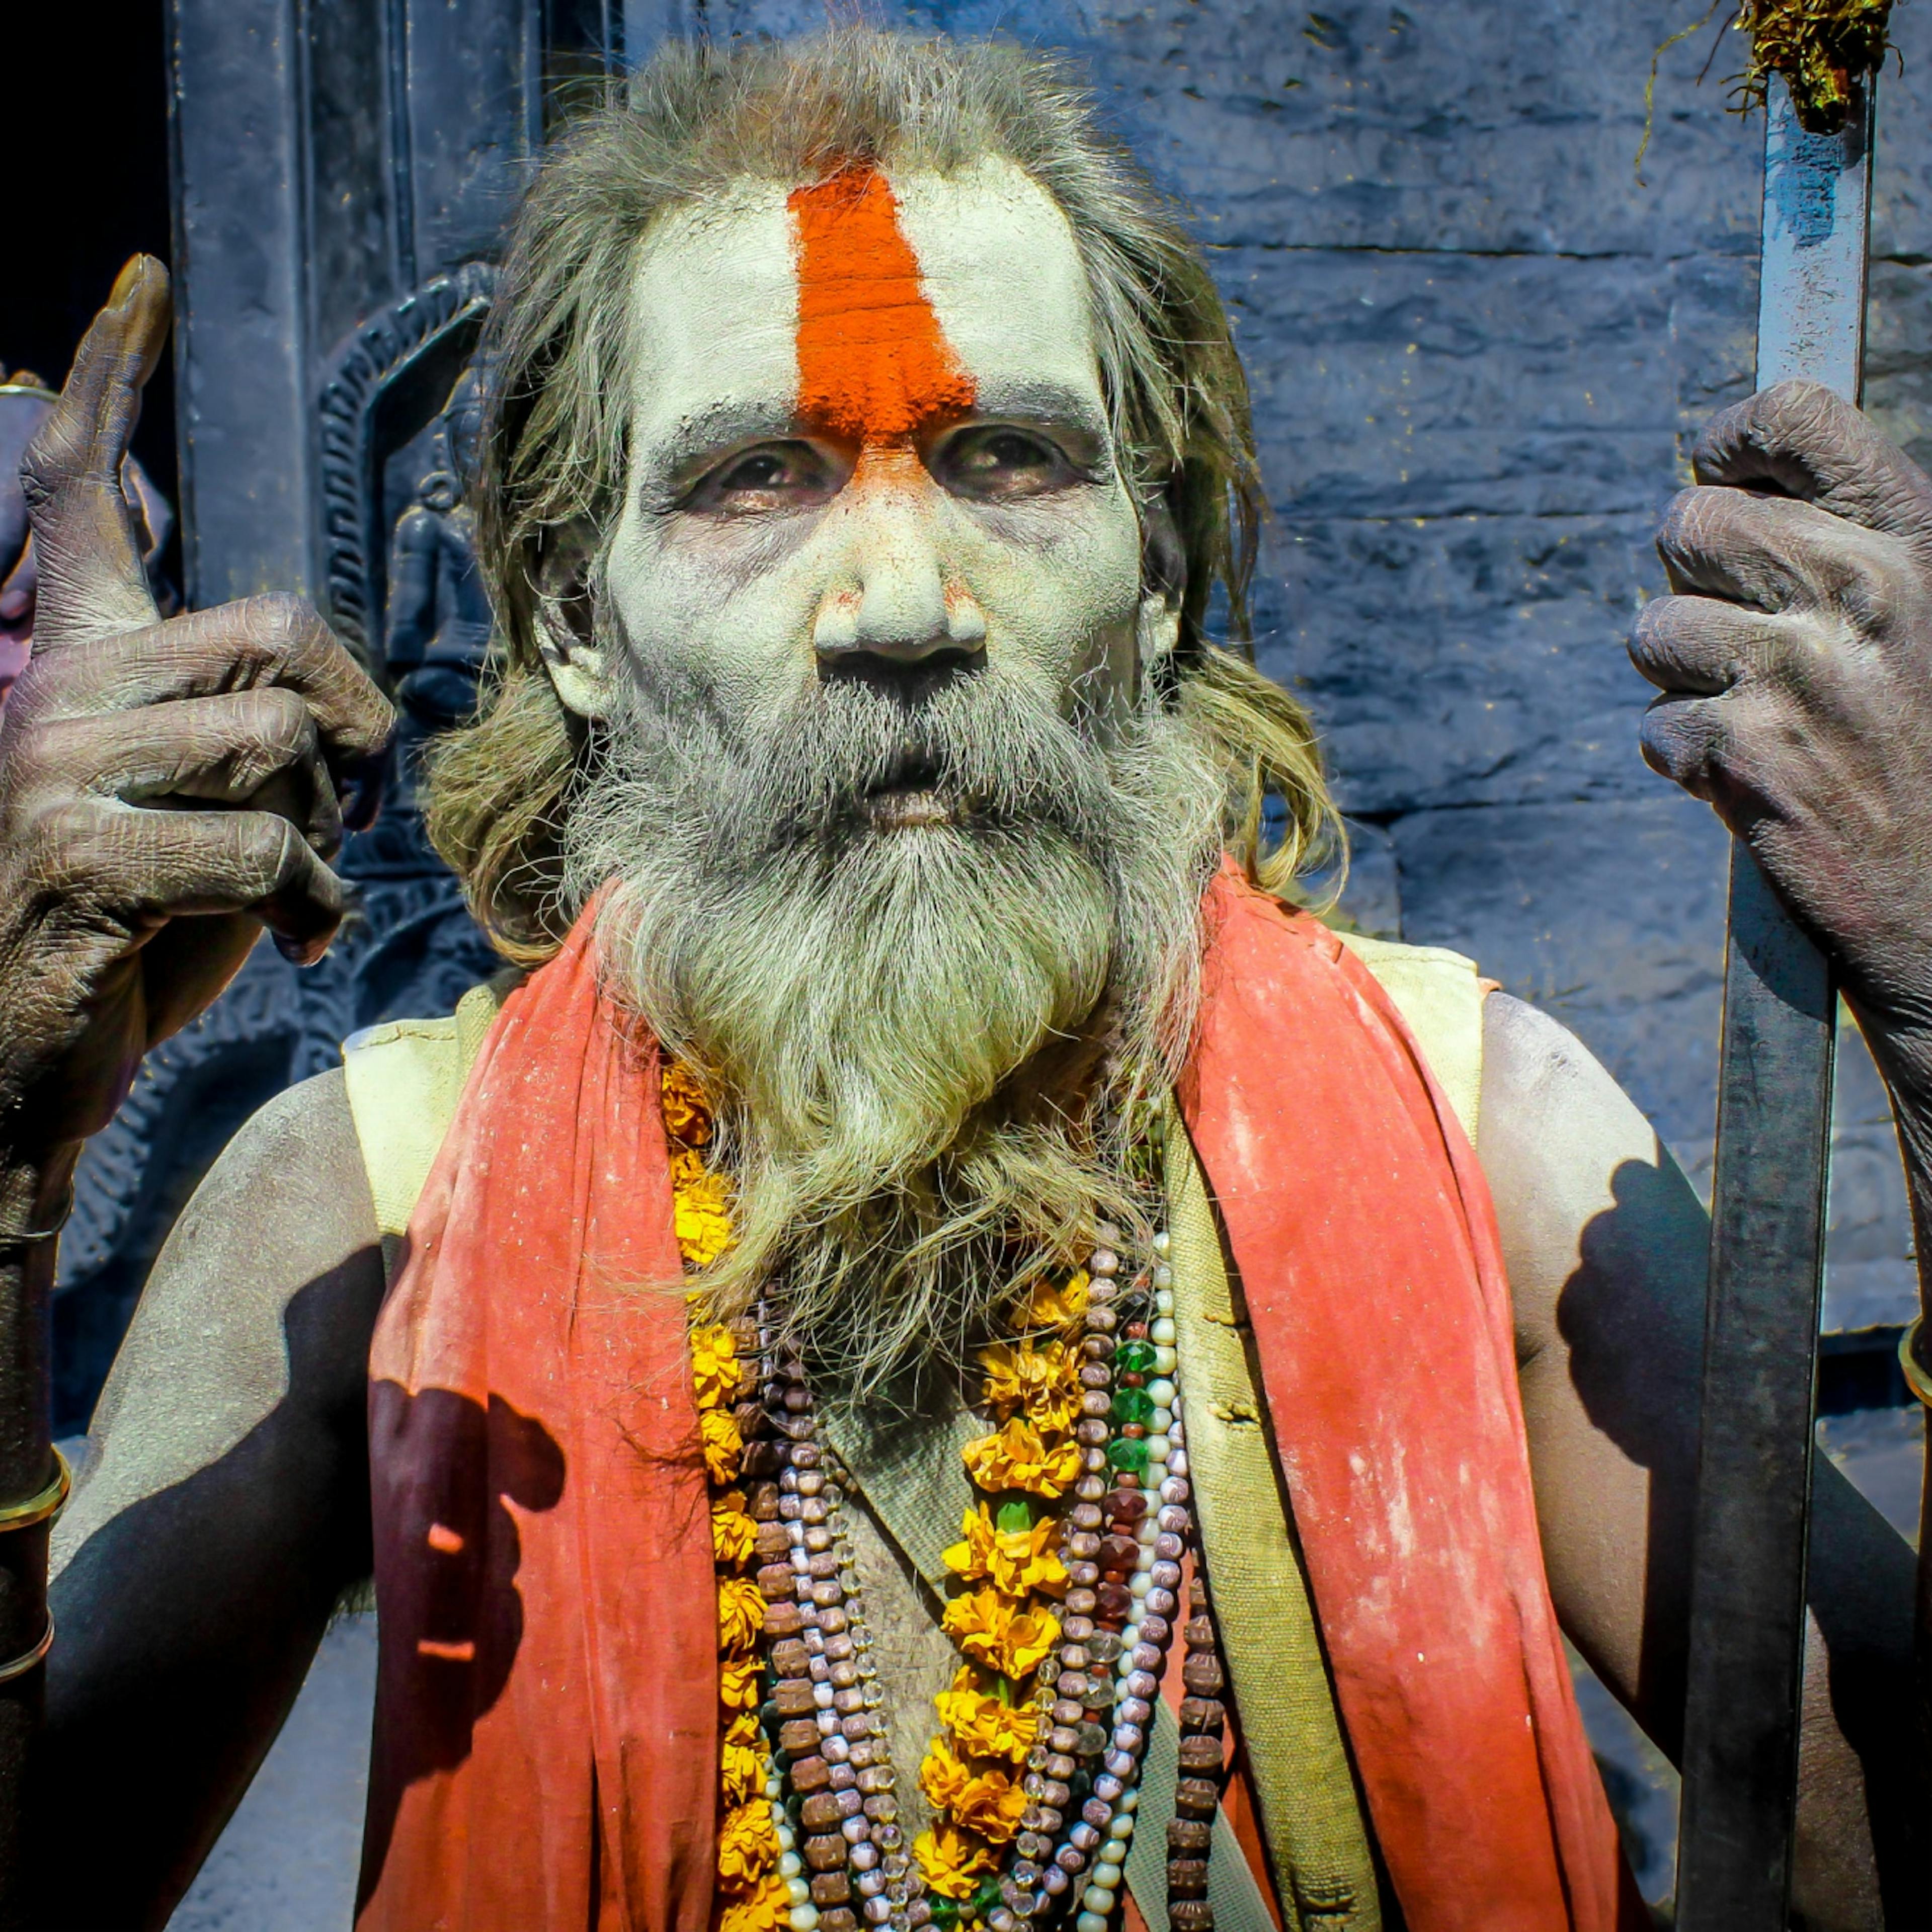 A Hindu guru shows his religious devotion in unconventional ways.